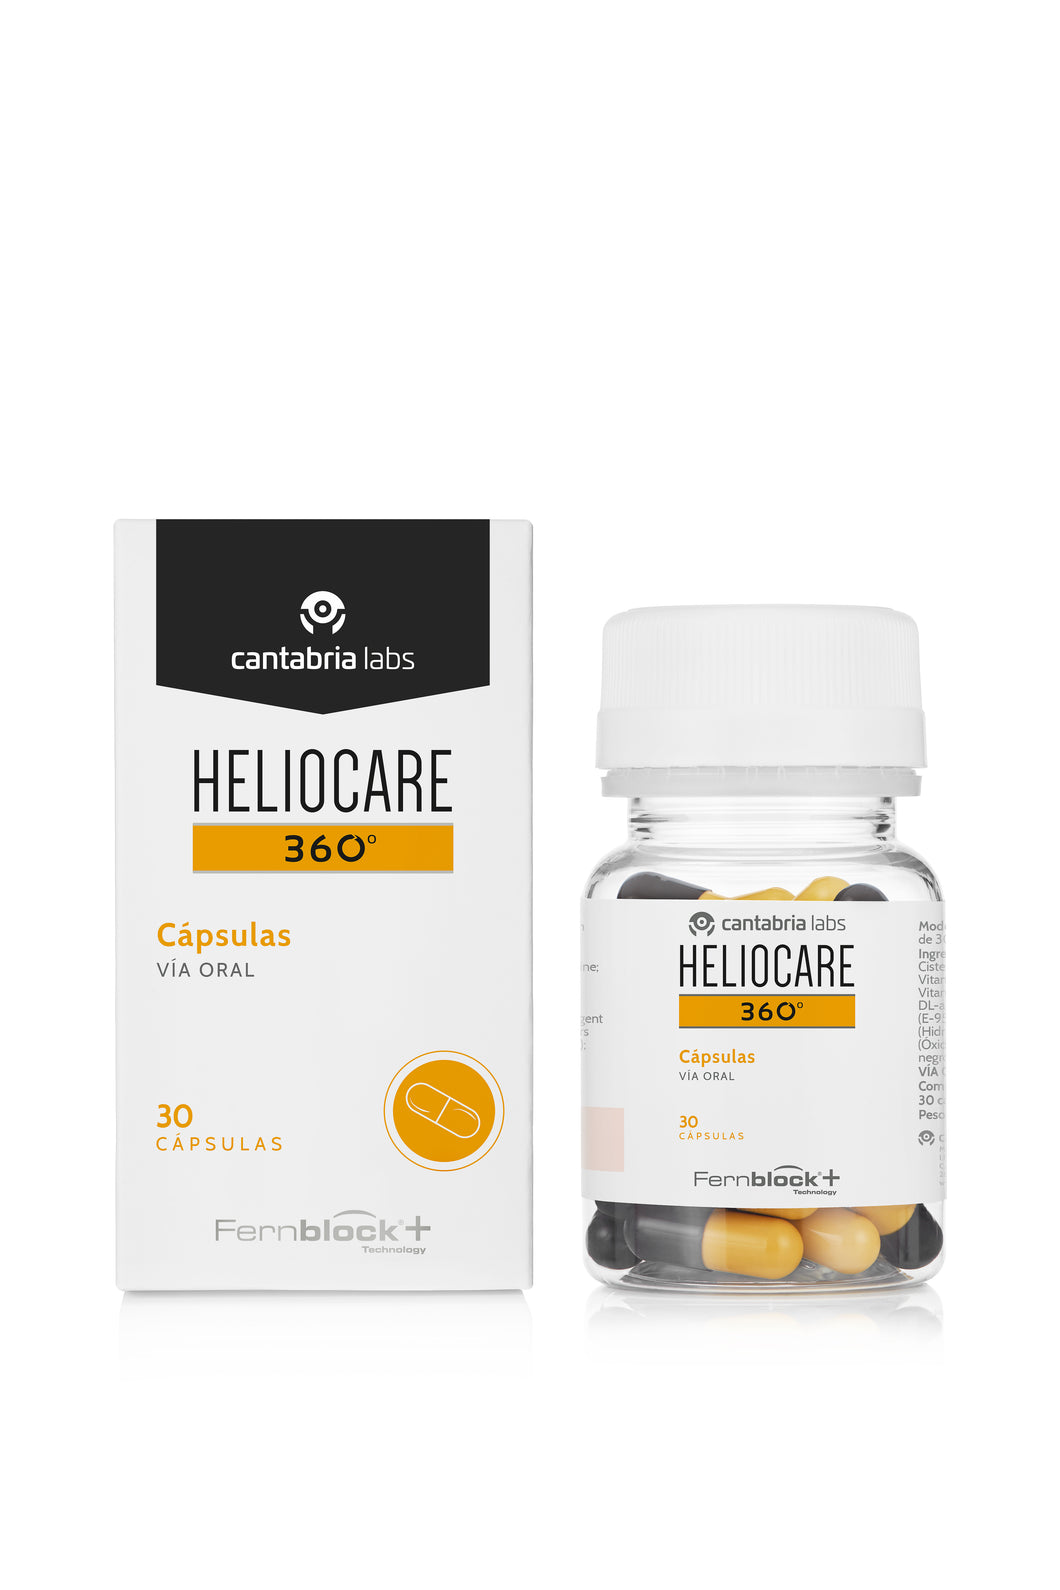 Heliocare 360° capsules